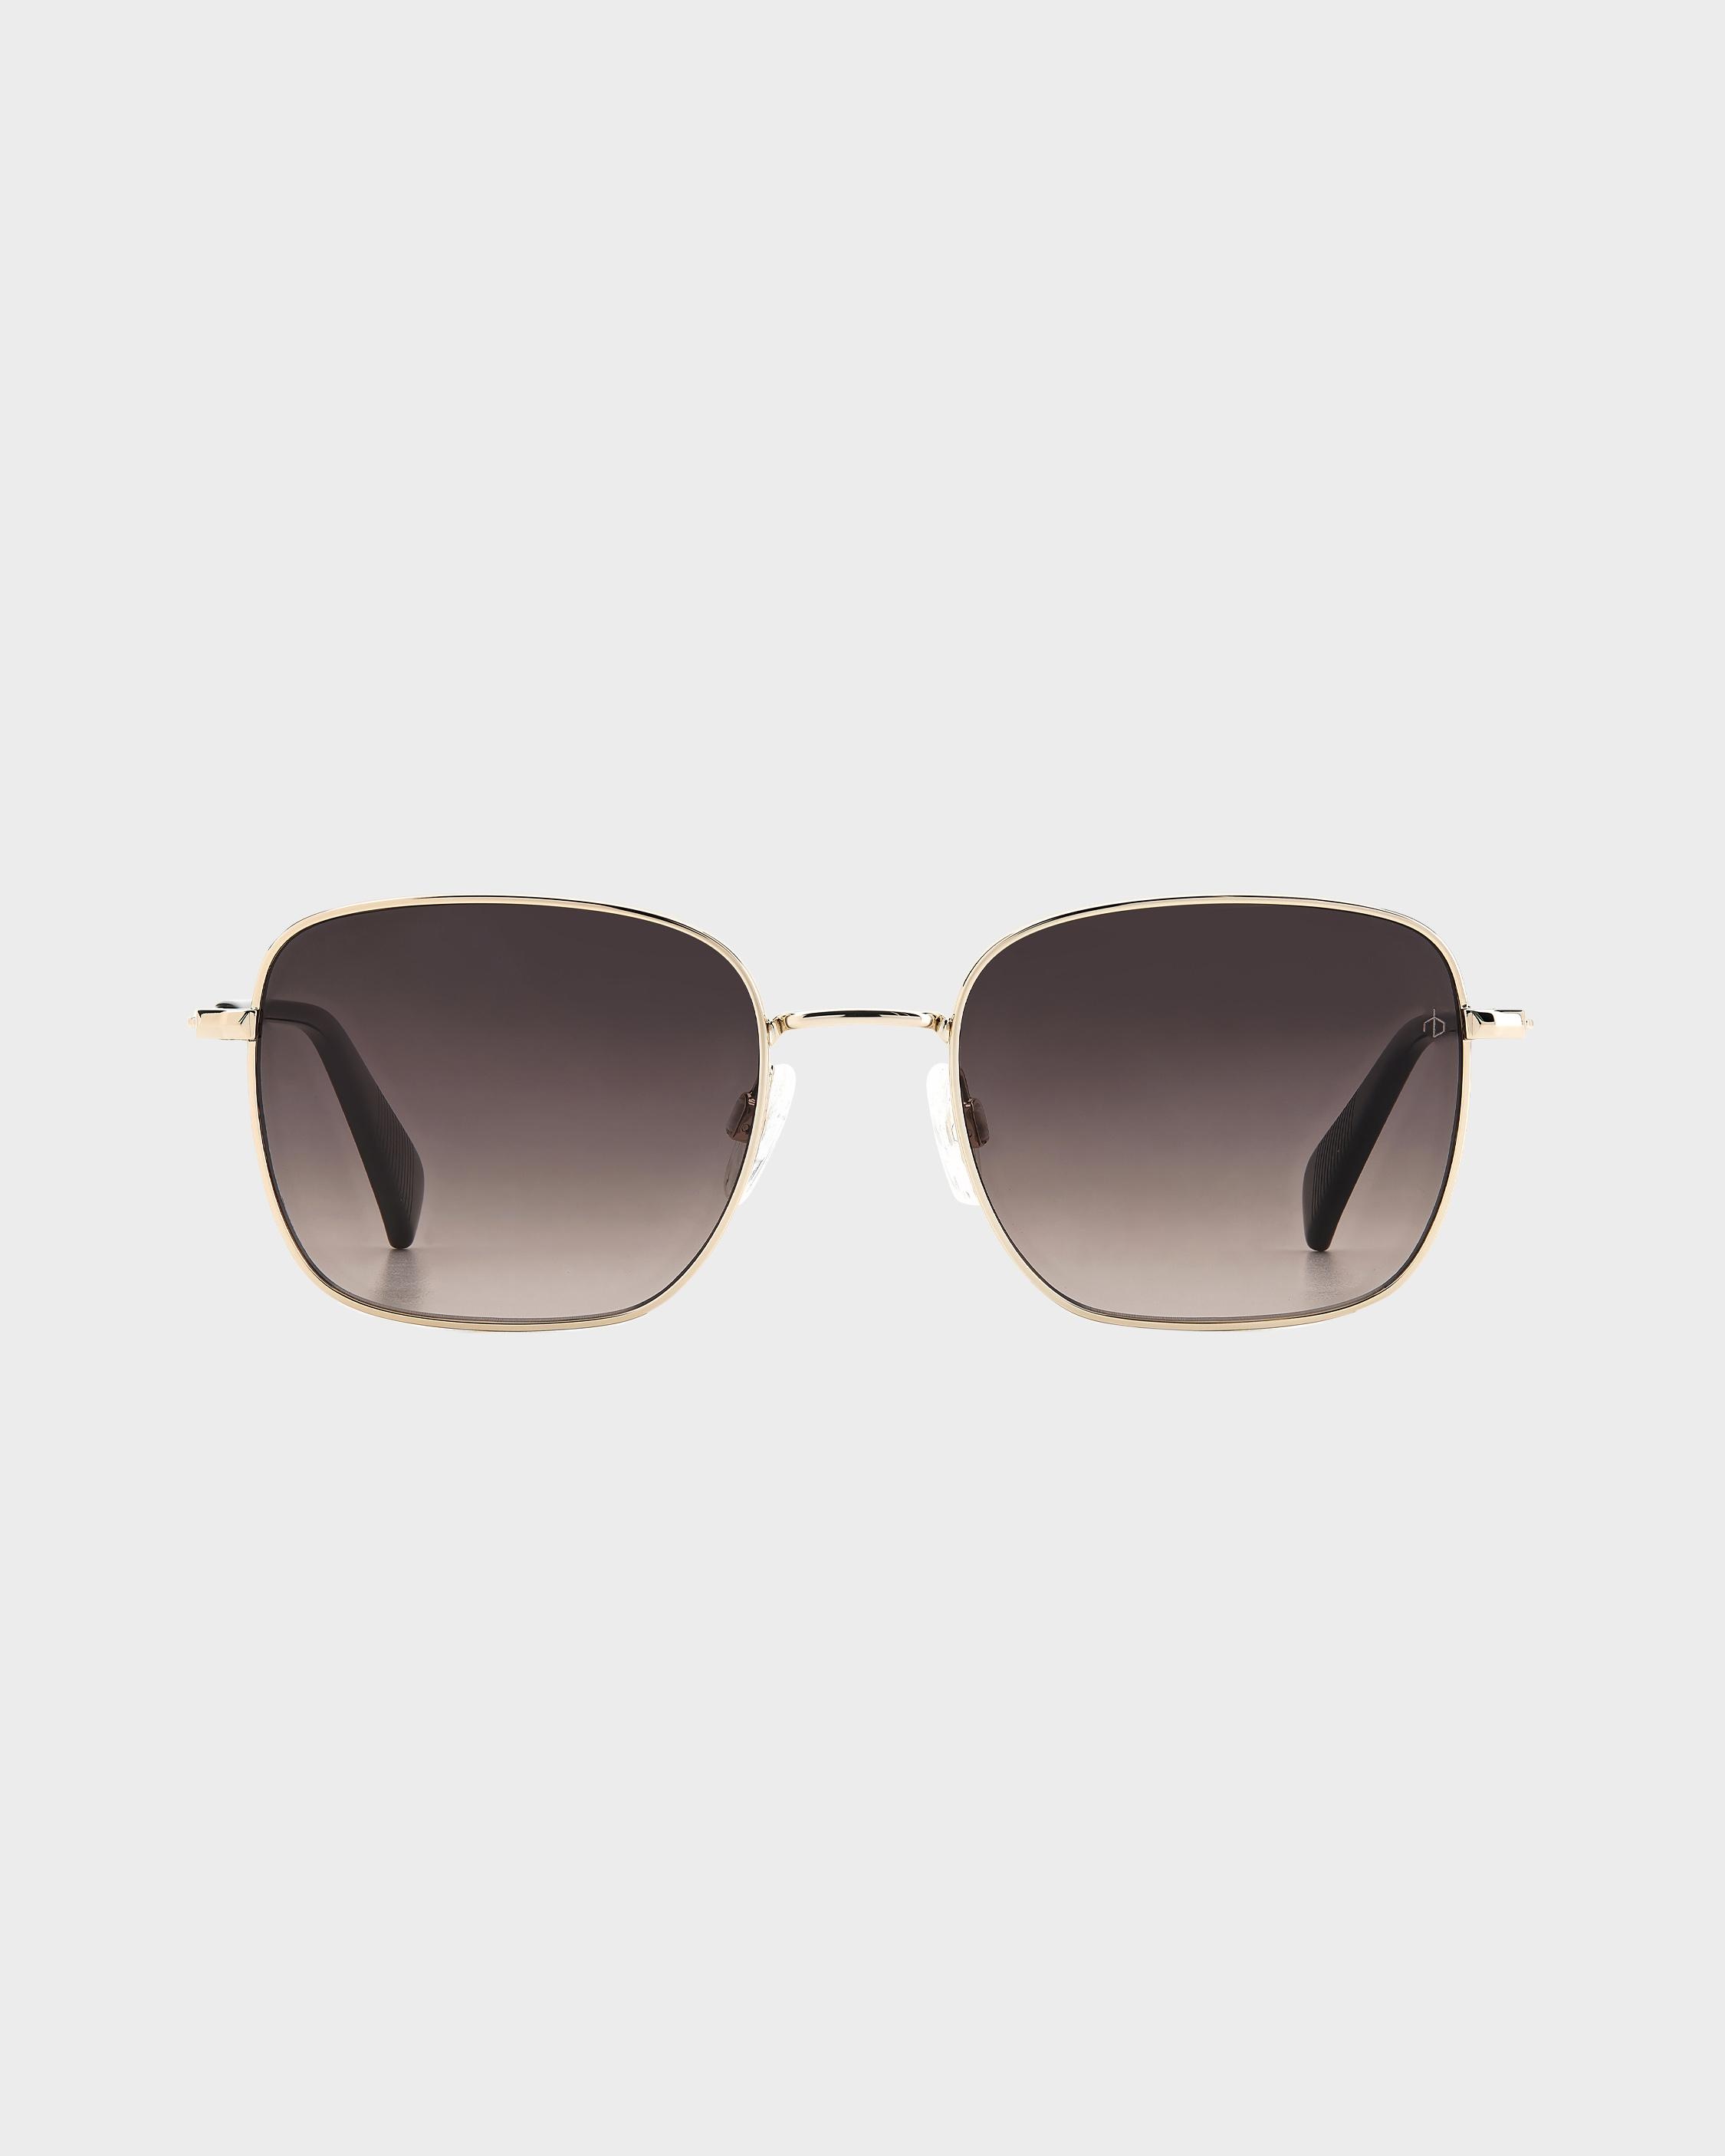 Breton
Square Sunglasses - 2